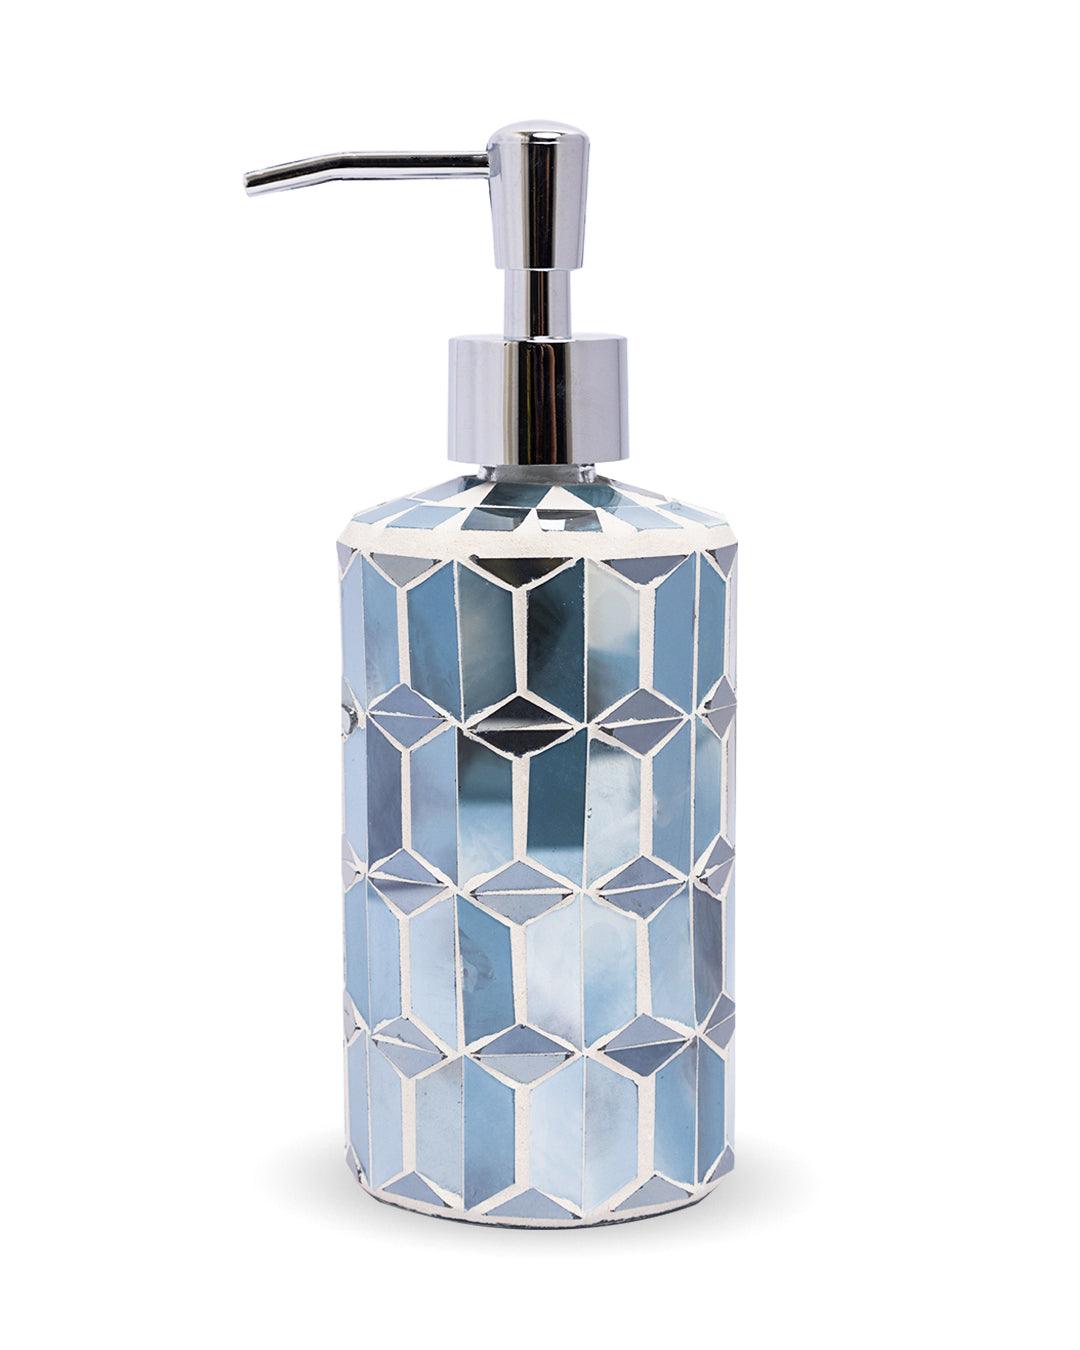 Market99 Soap Dispenser, Blue, Glass, 400 mL - MARKET 99